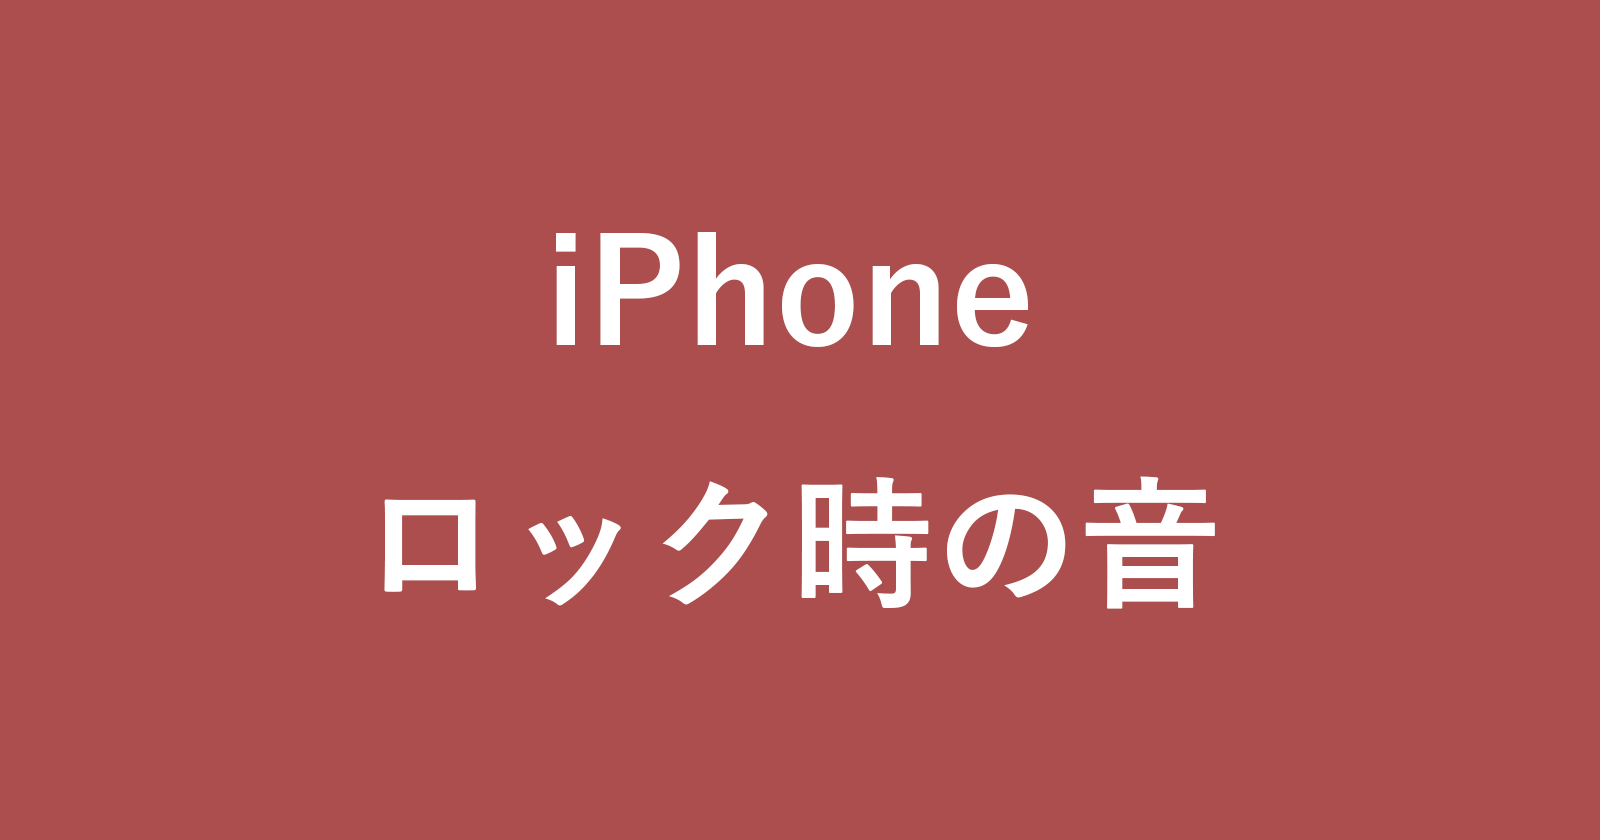 iphone lock sound